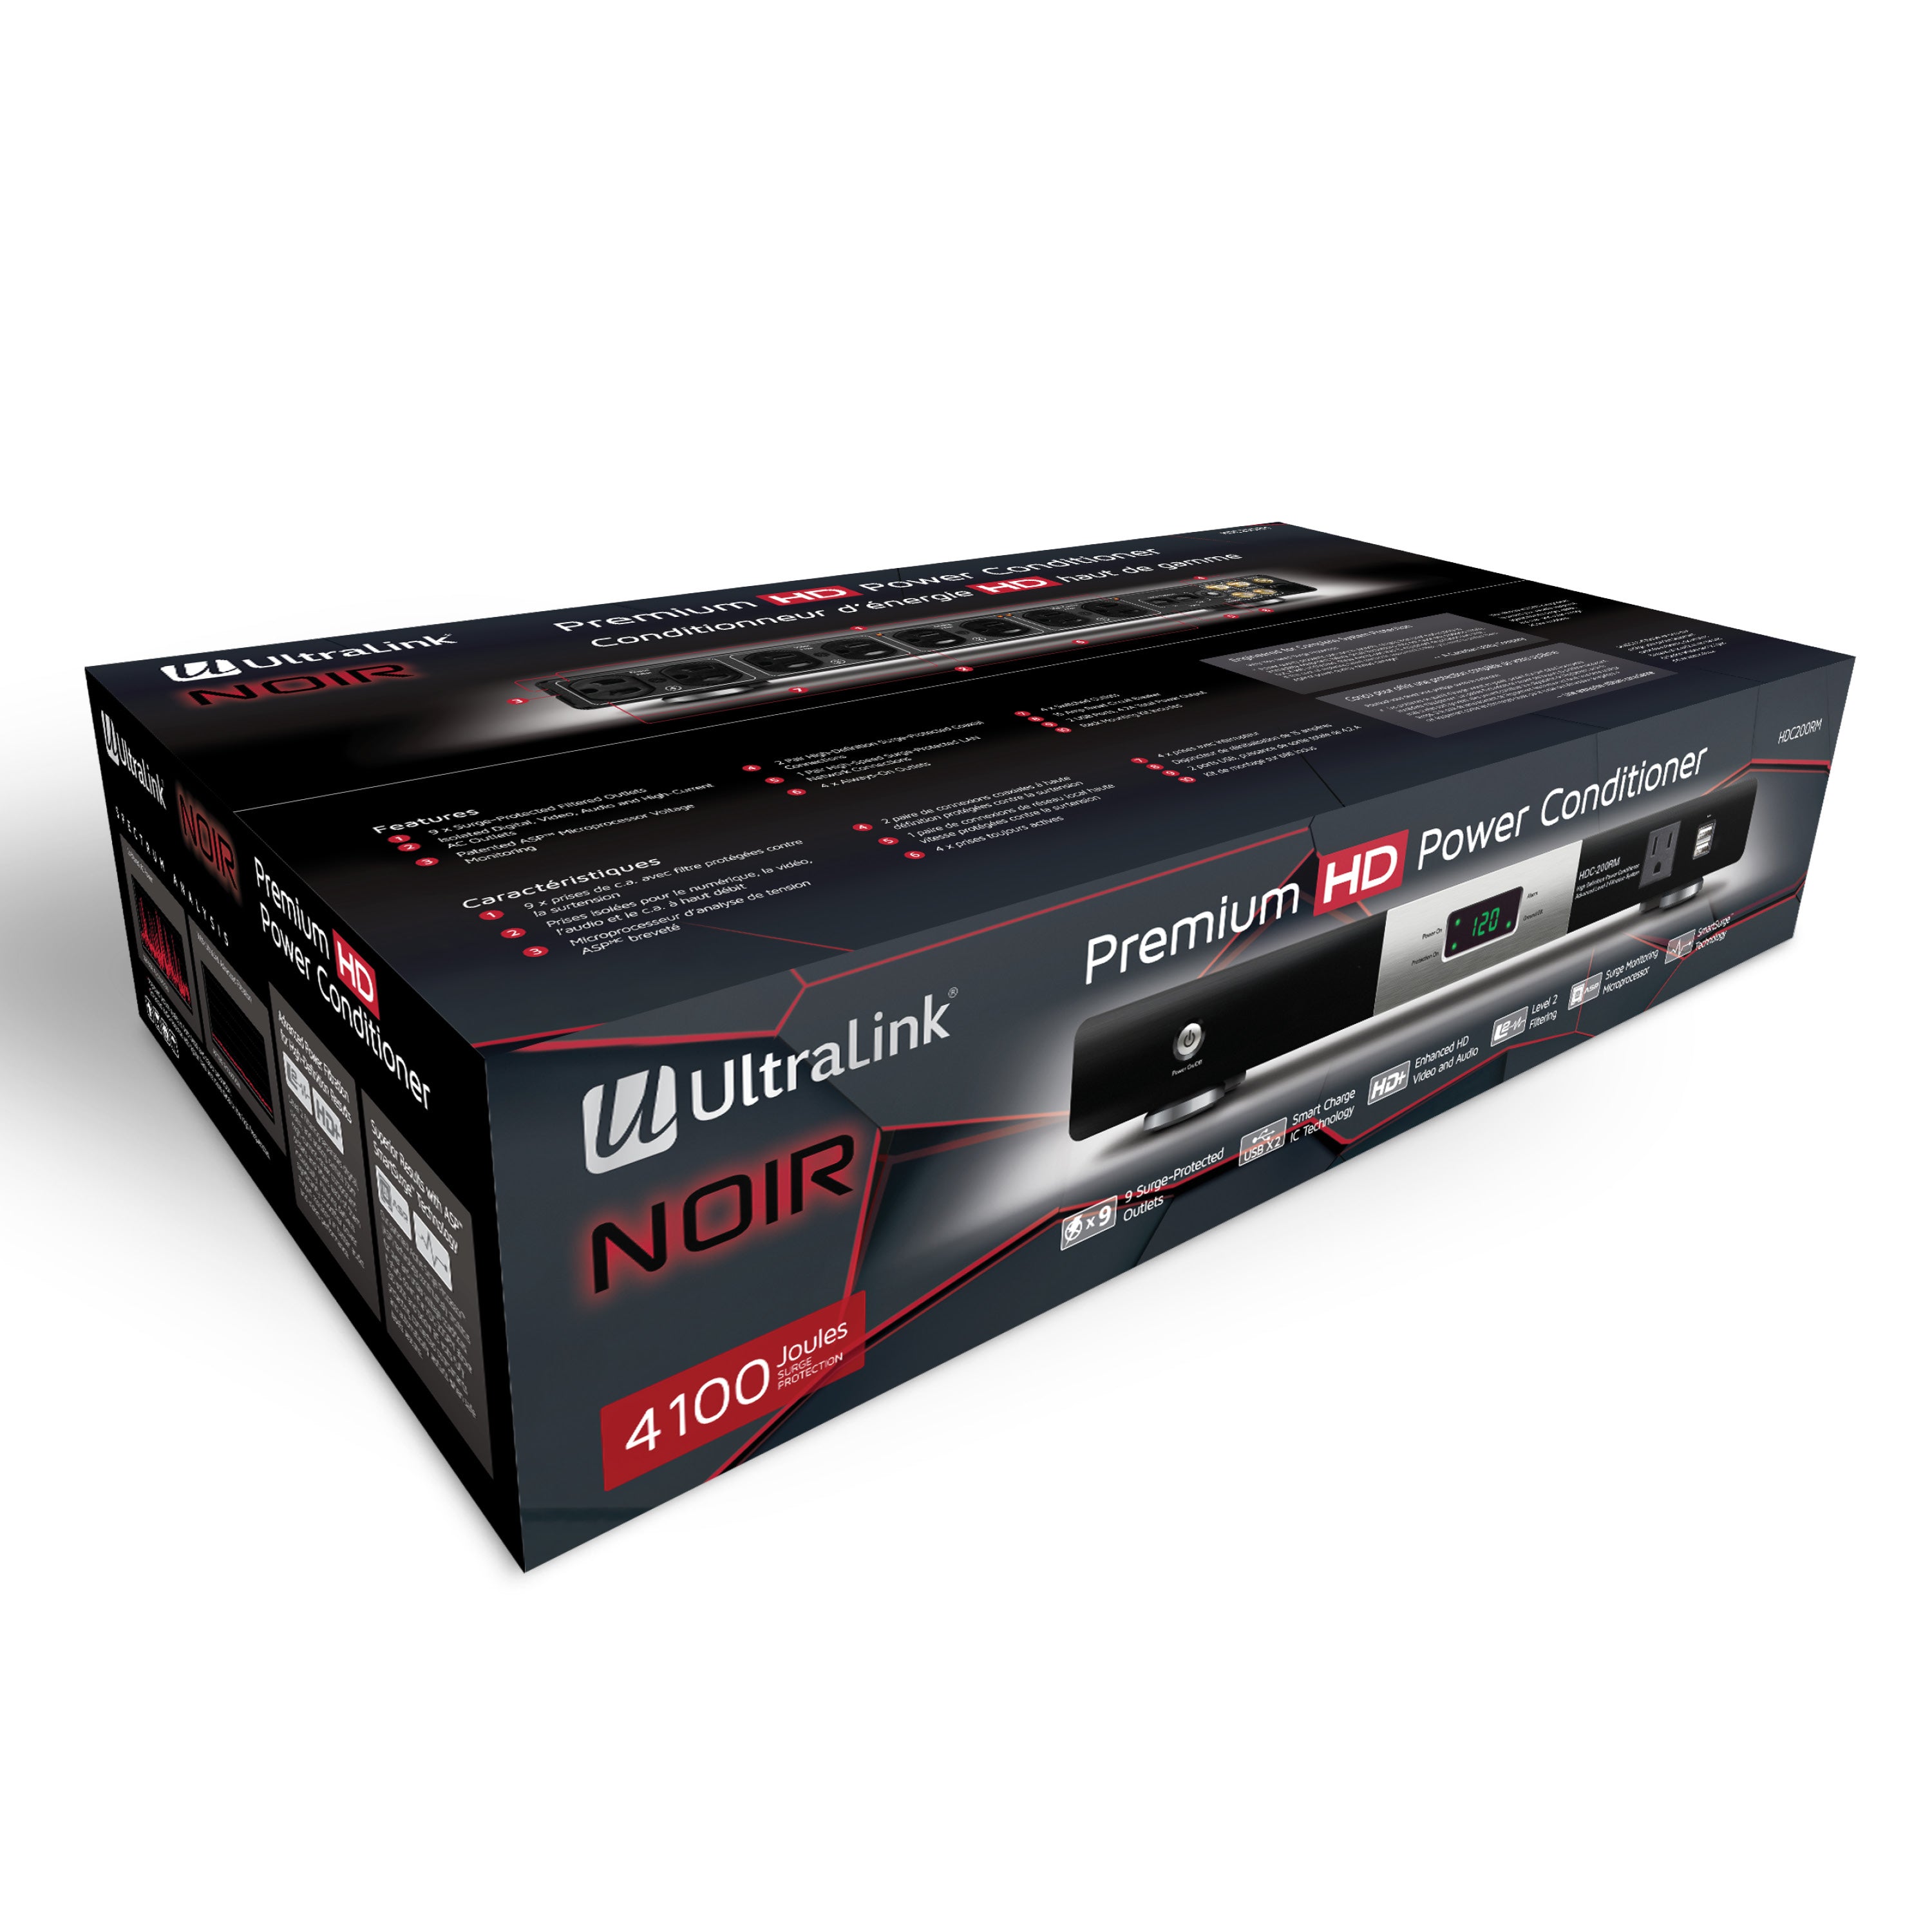 UltraLink Noir Premium HD Power Conditioner - 9 Outlet